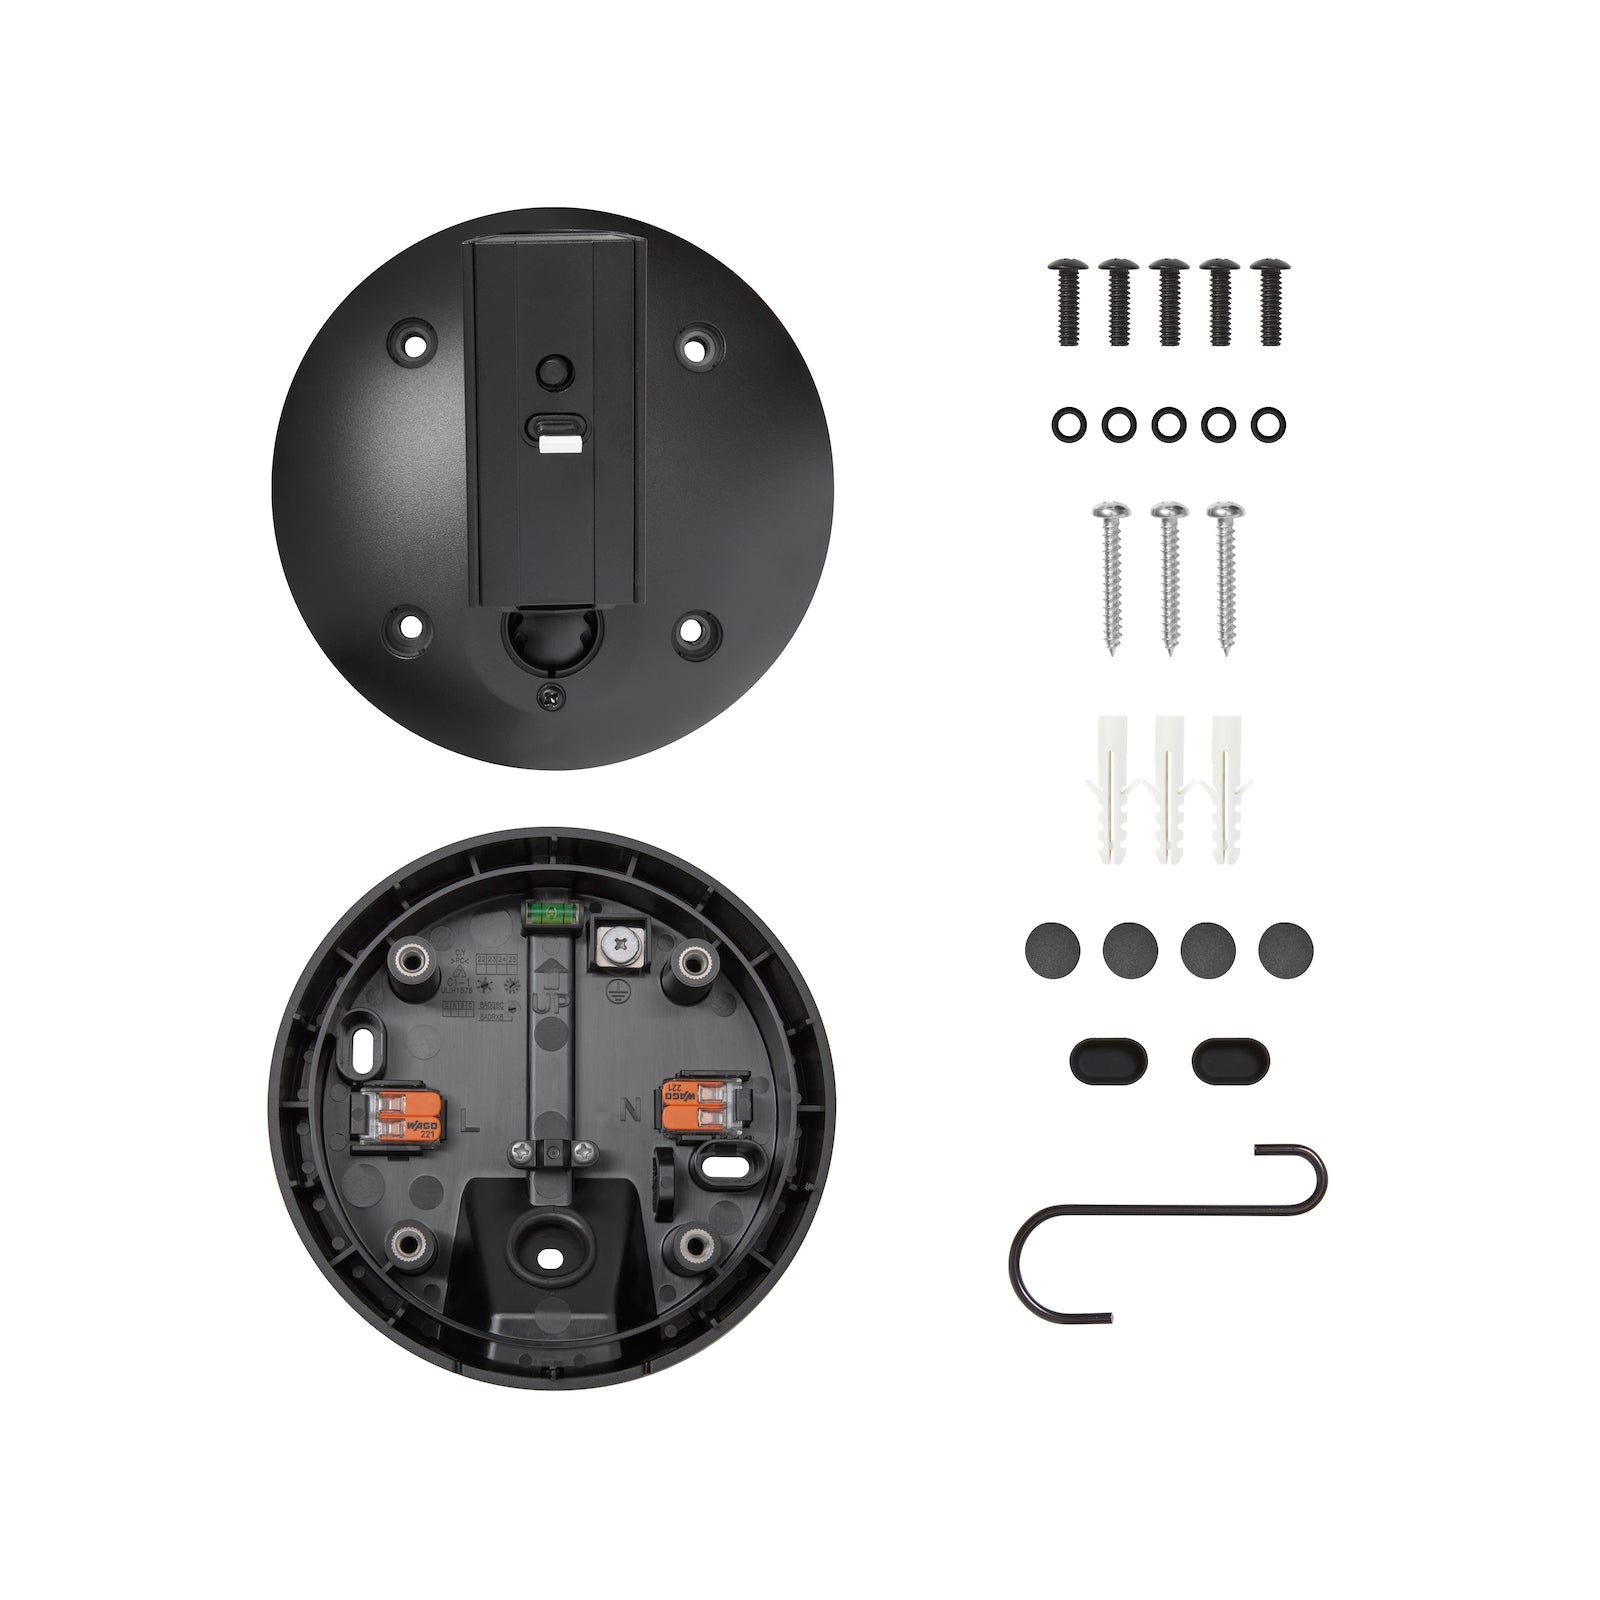 Hardwired Kit for Cameras (Spotlight Cam Plus, Spotlight Cam Pro) - Black